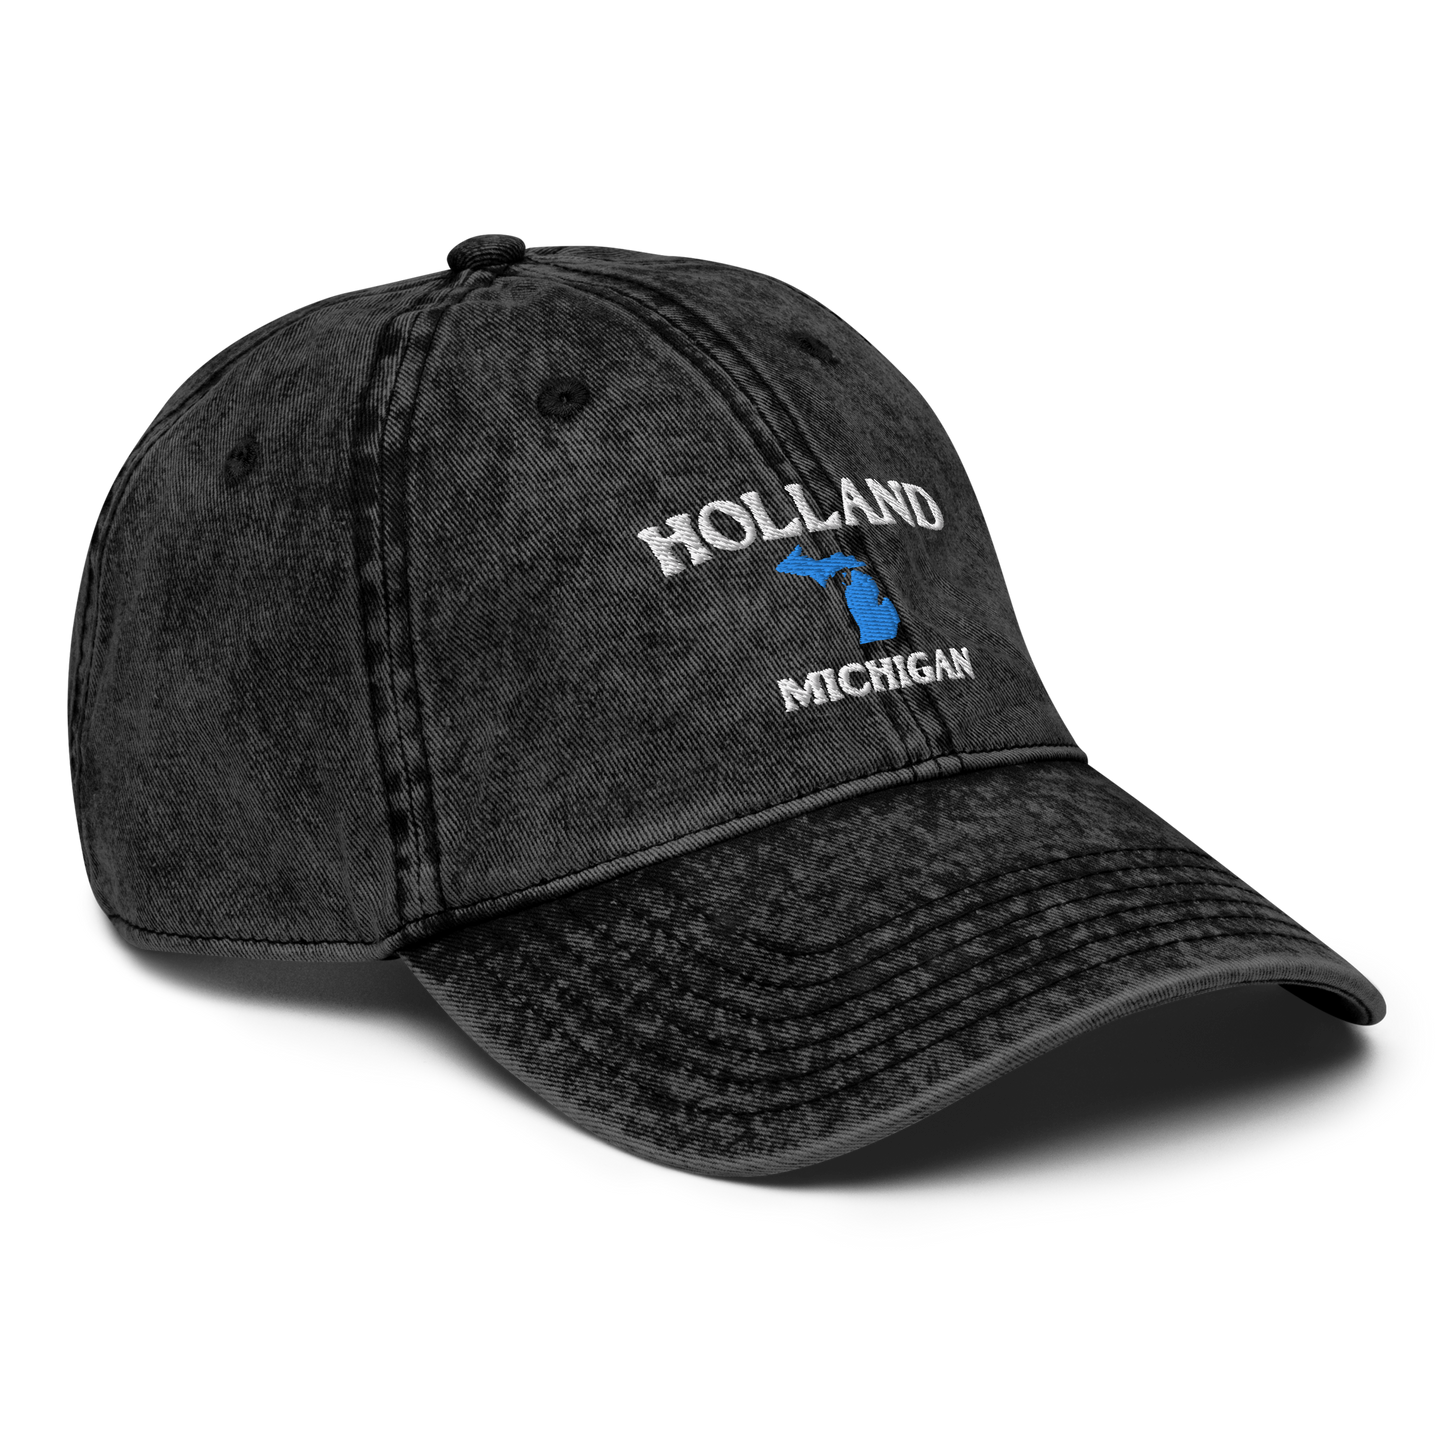 'Holland Michigan' Vintage Baseball Cap (w/ Michigan Outline)